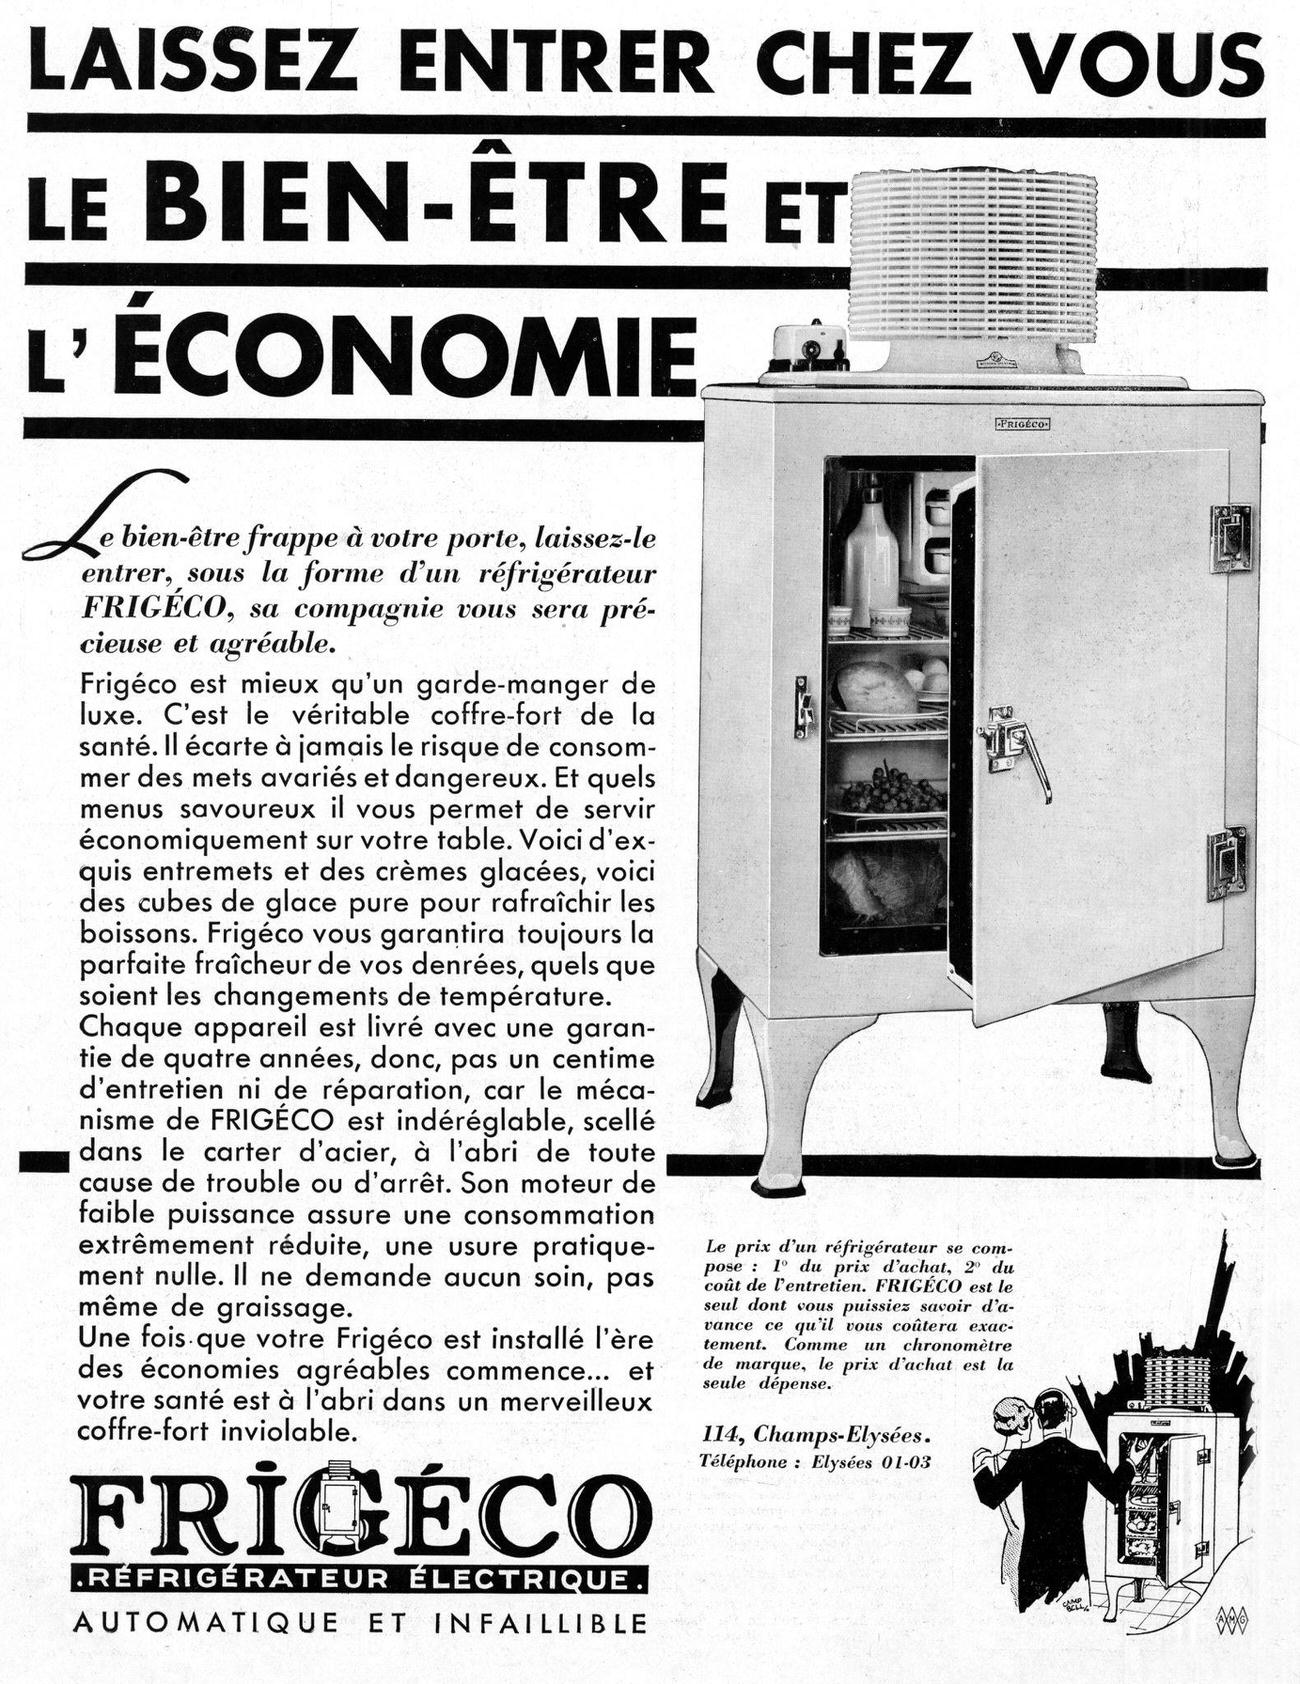 Frigeco fridges French ad, December 1932.